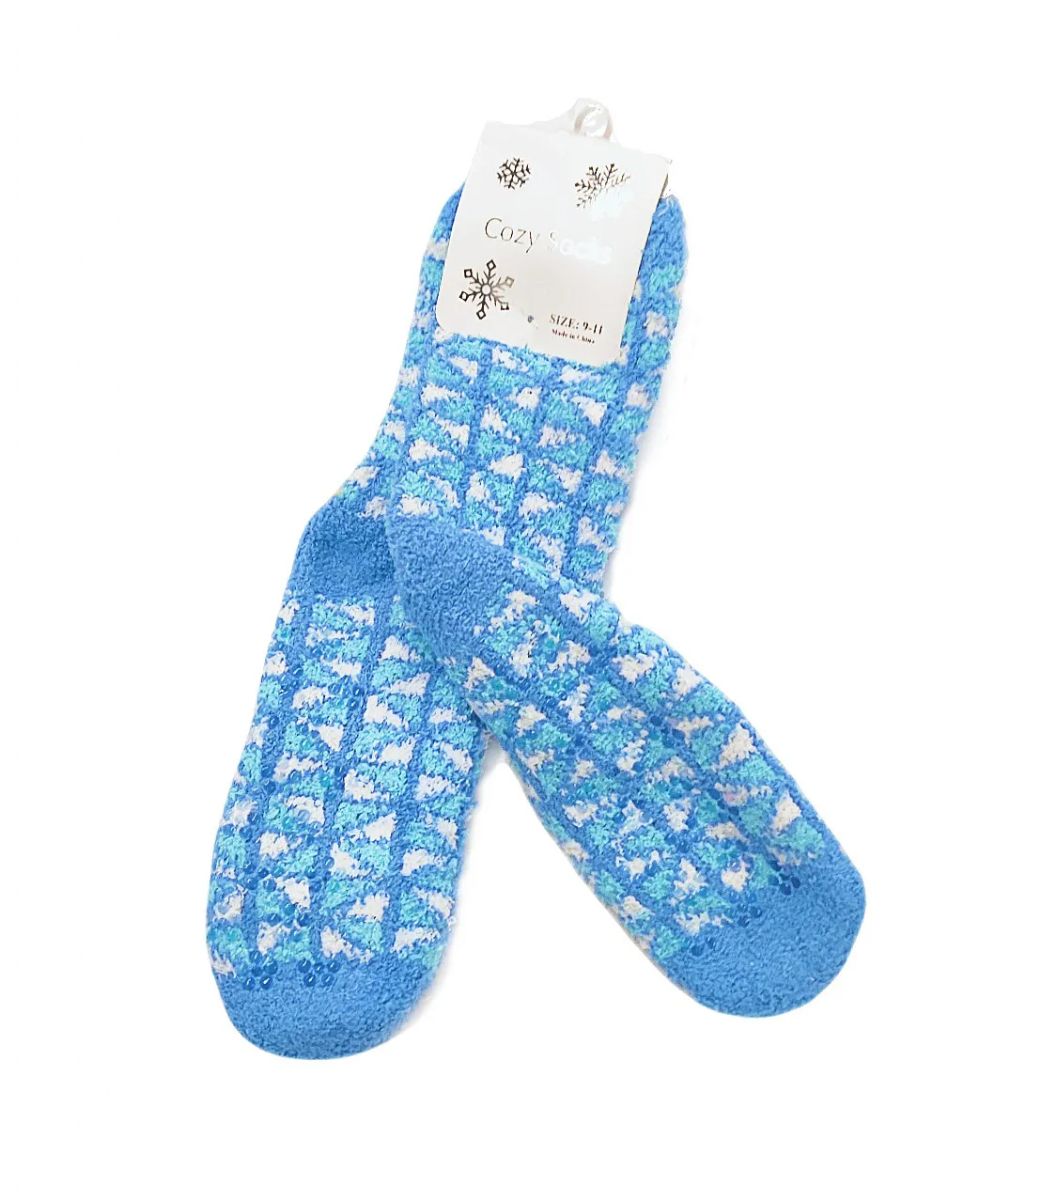 300 Pieces of Fuzzy Non Slip Snowflake Design Long Socks